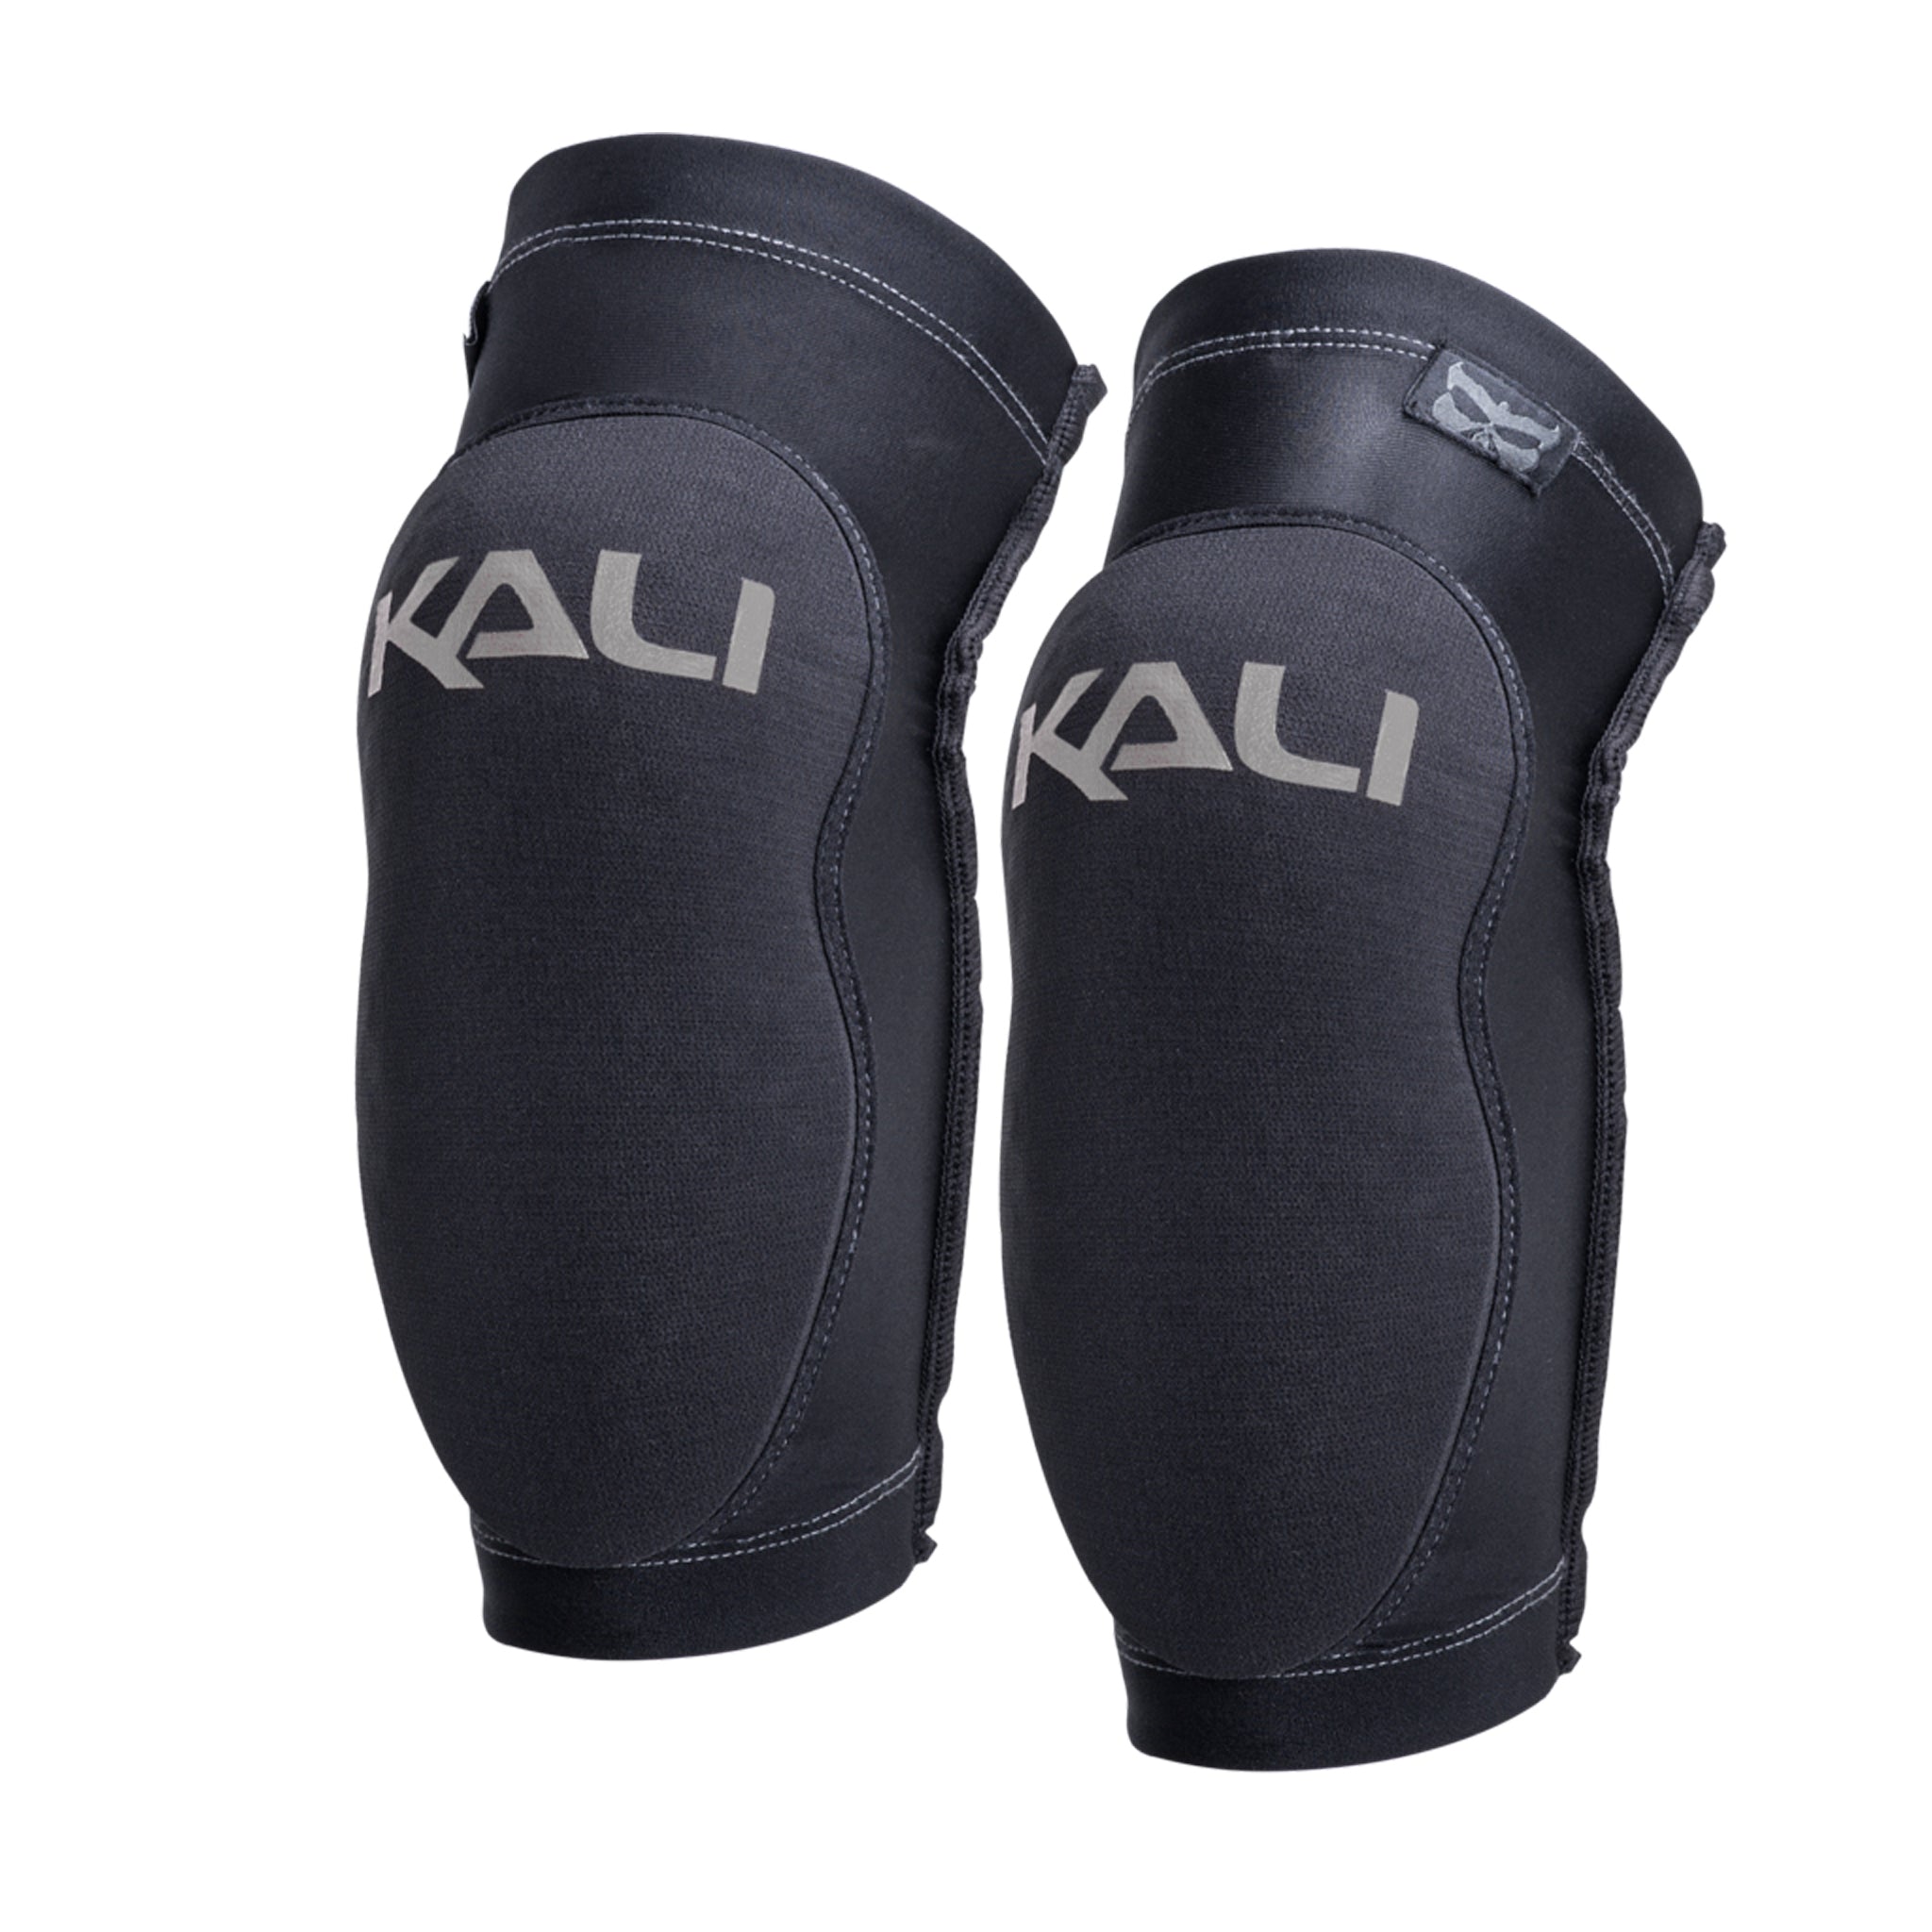 Kali Mission Elbow Guards Large Black/Gray